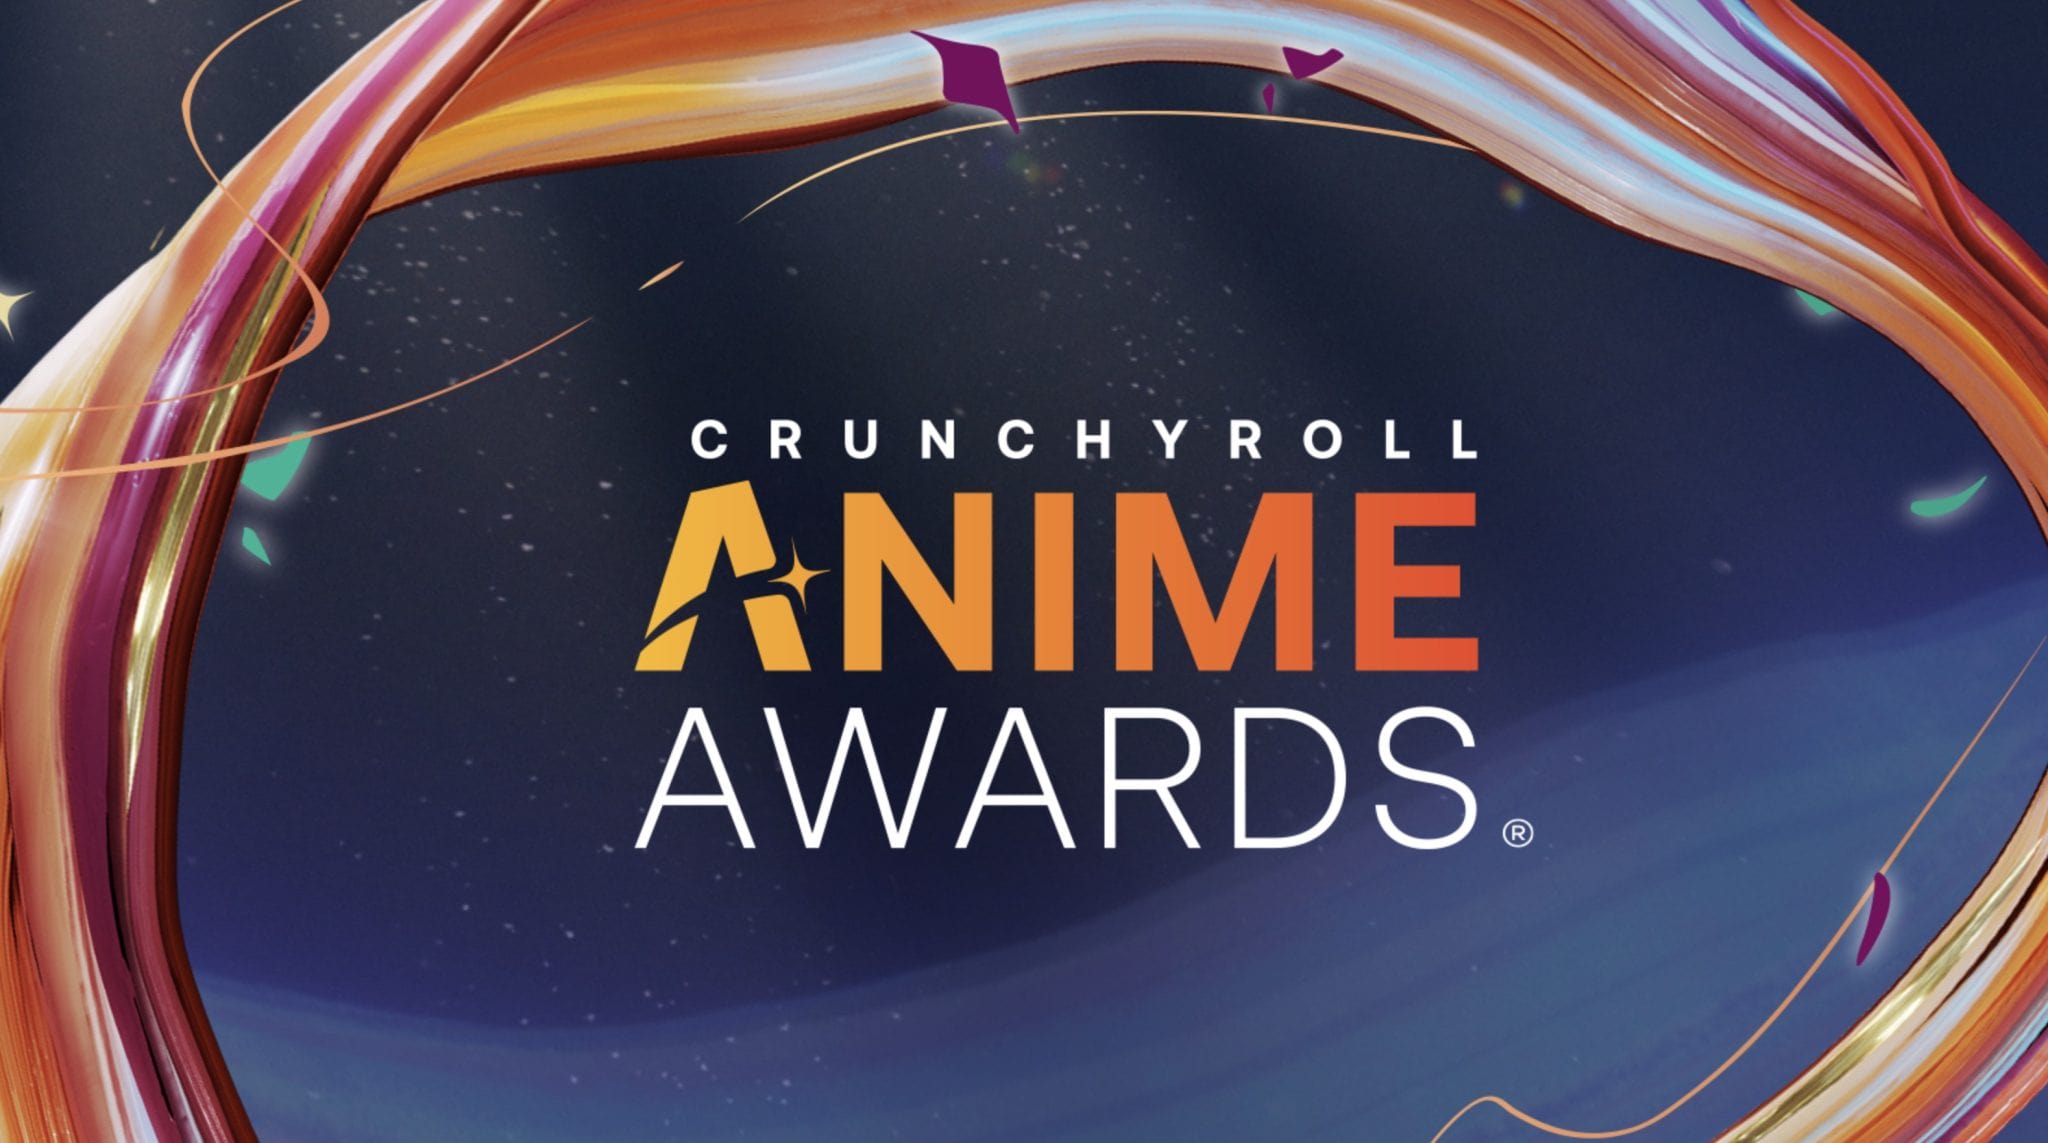 Crunchyroll Anime Awards Snub One Piece with Zero Nominations OtakuKart